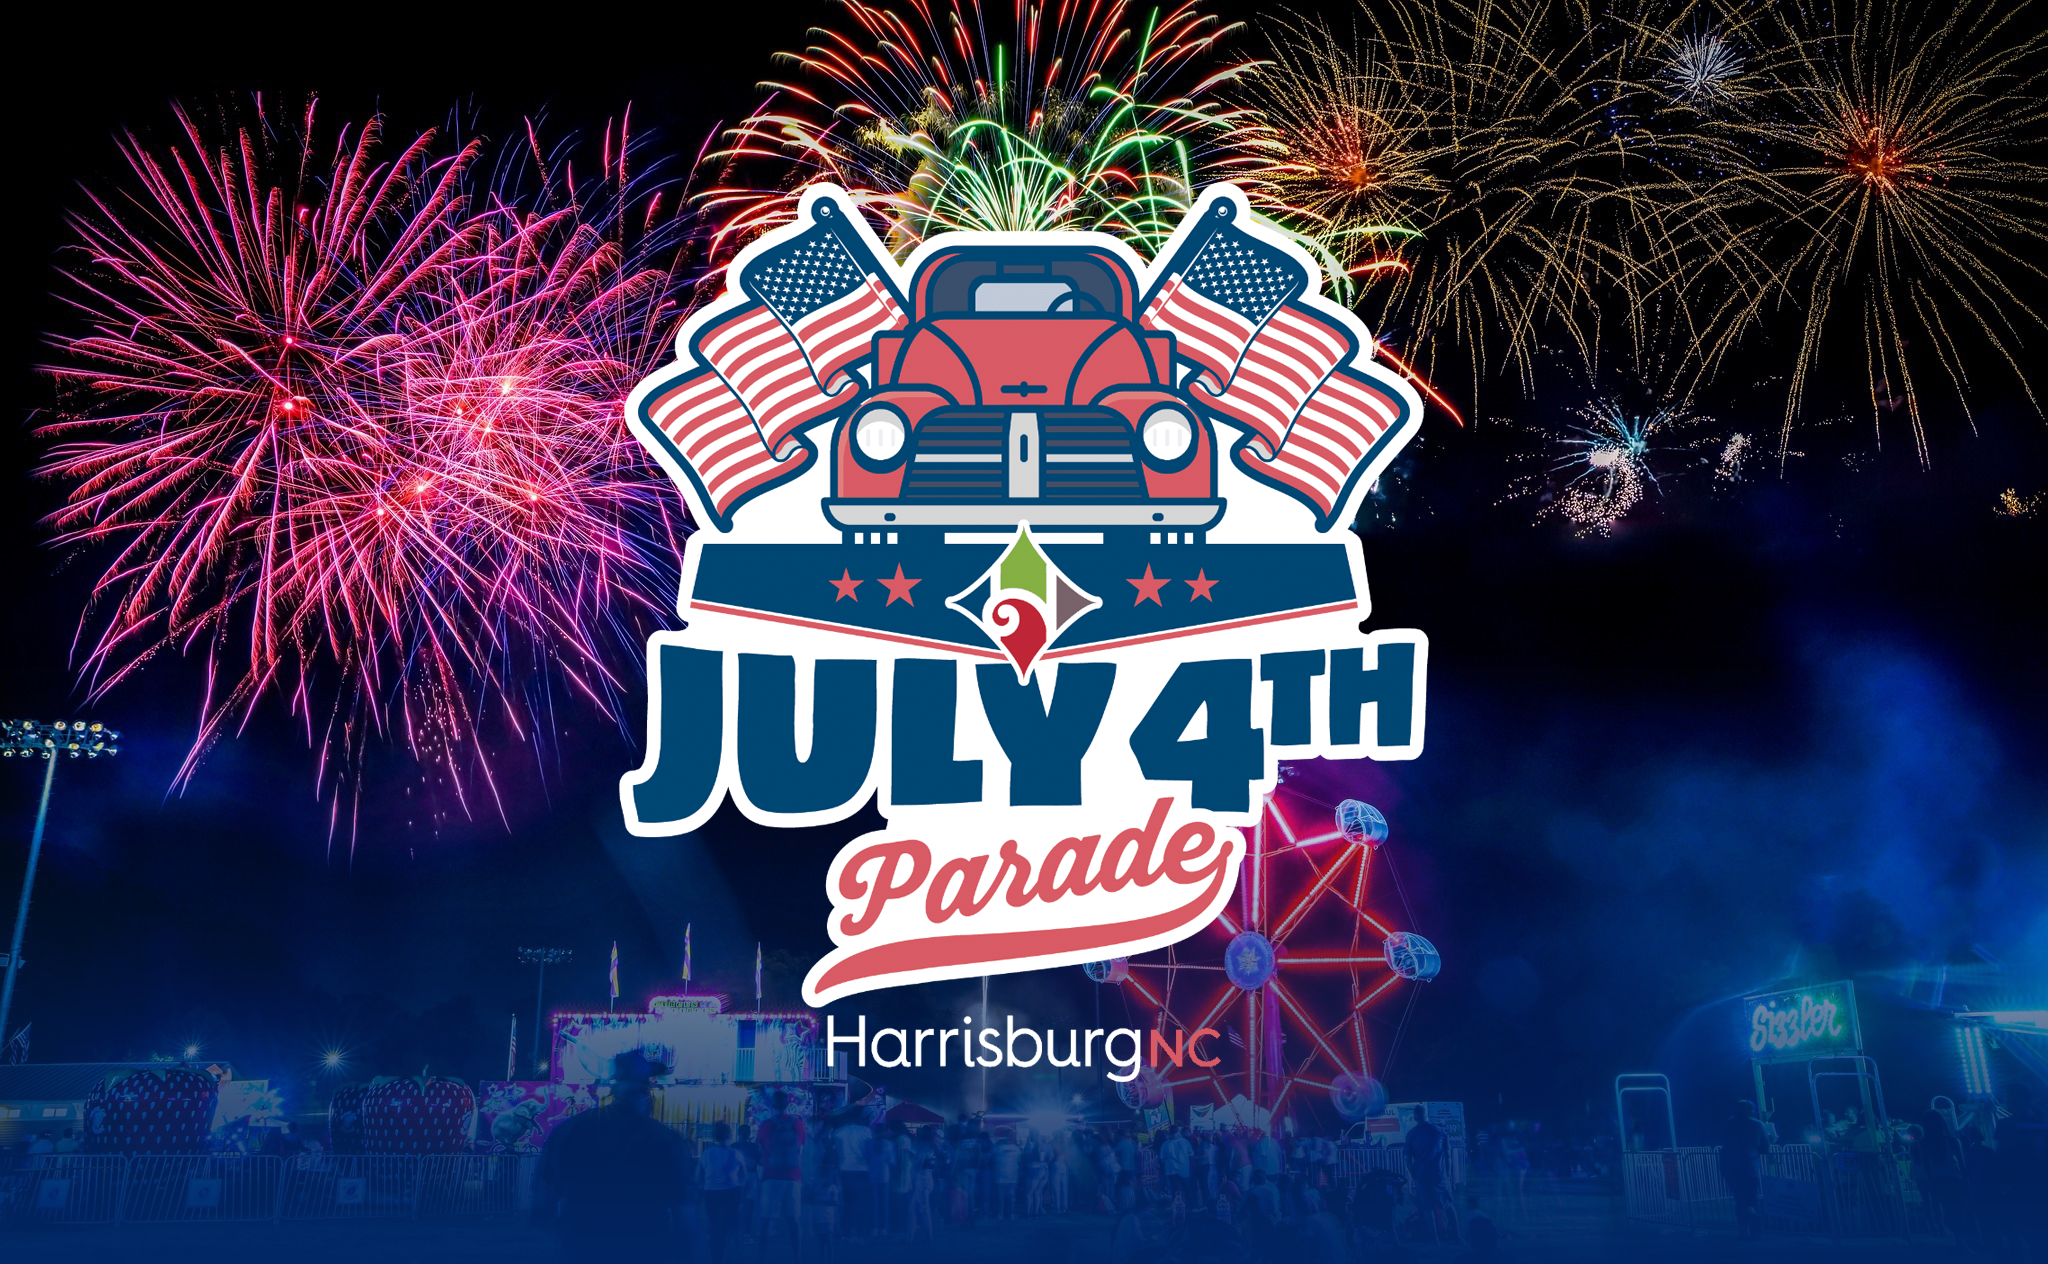 Harrisburg's July 4th Celebration